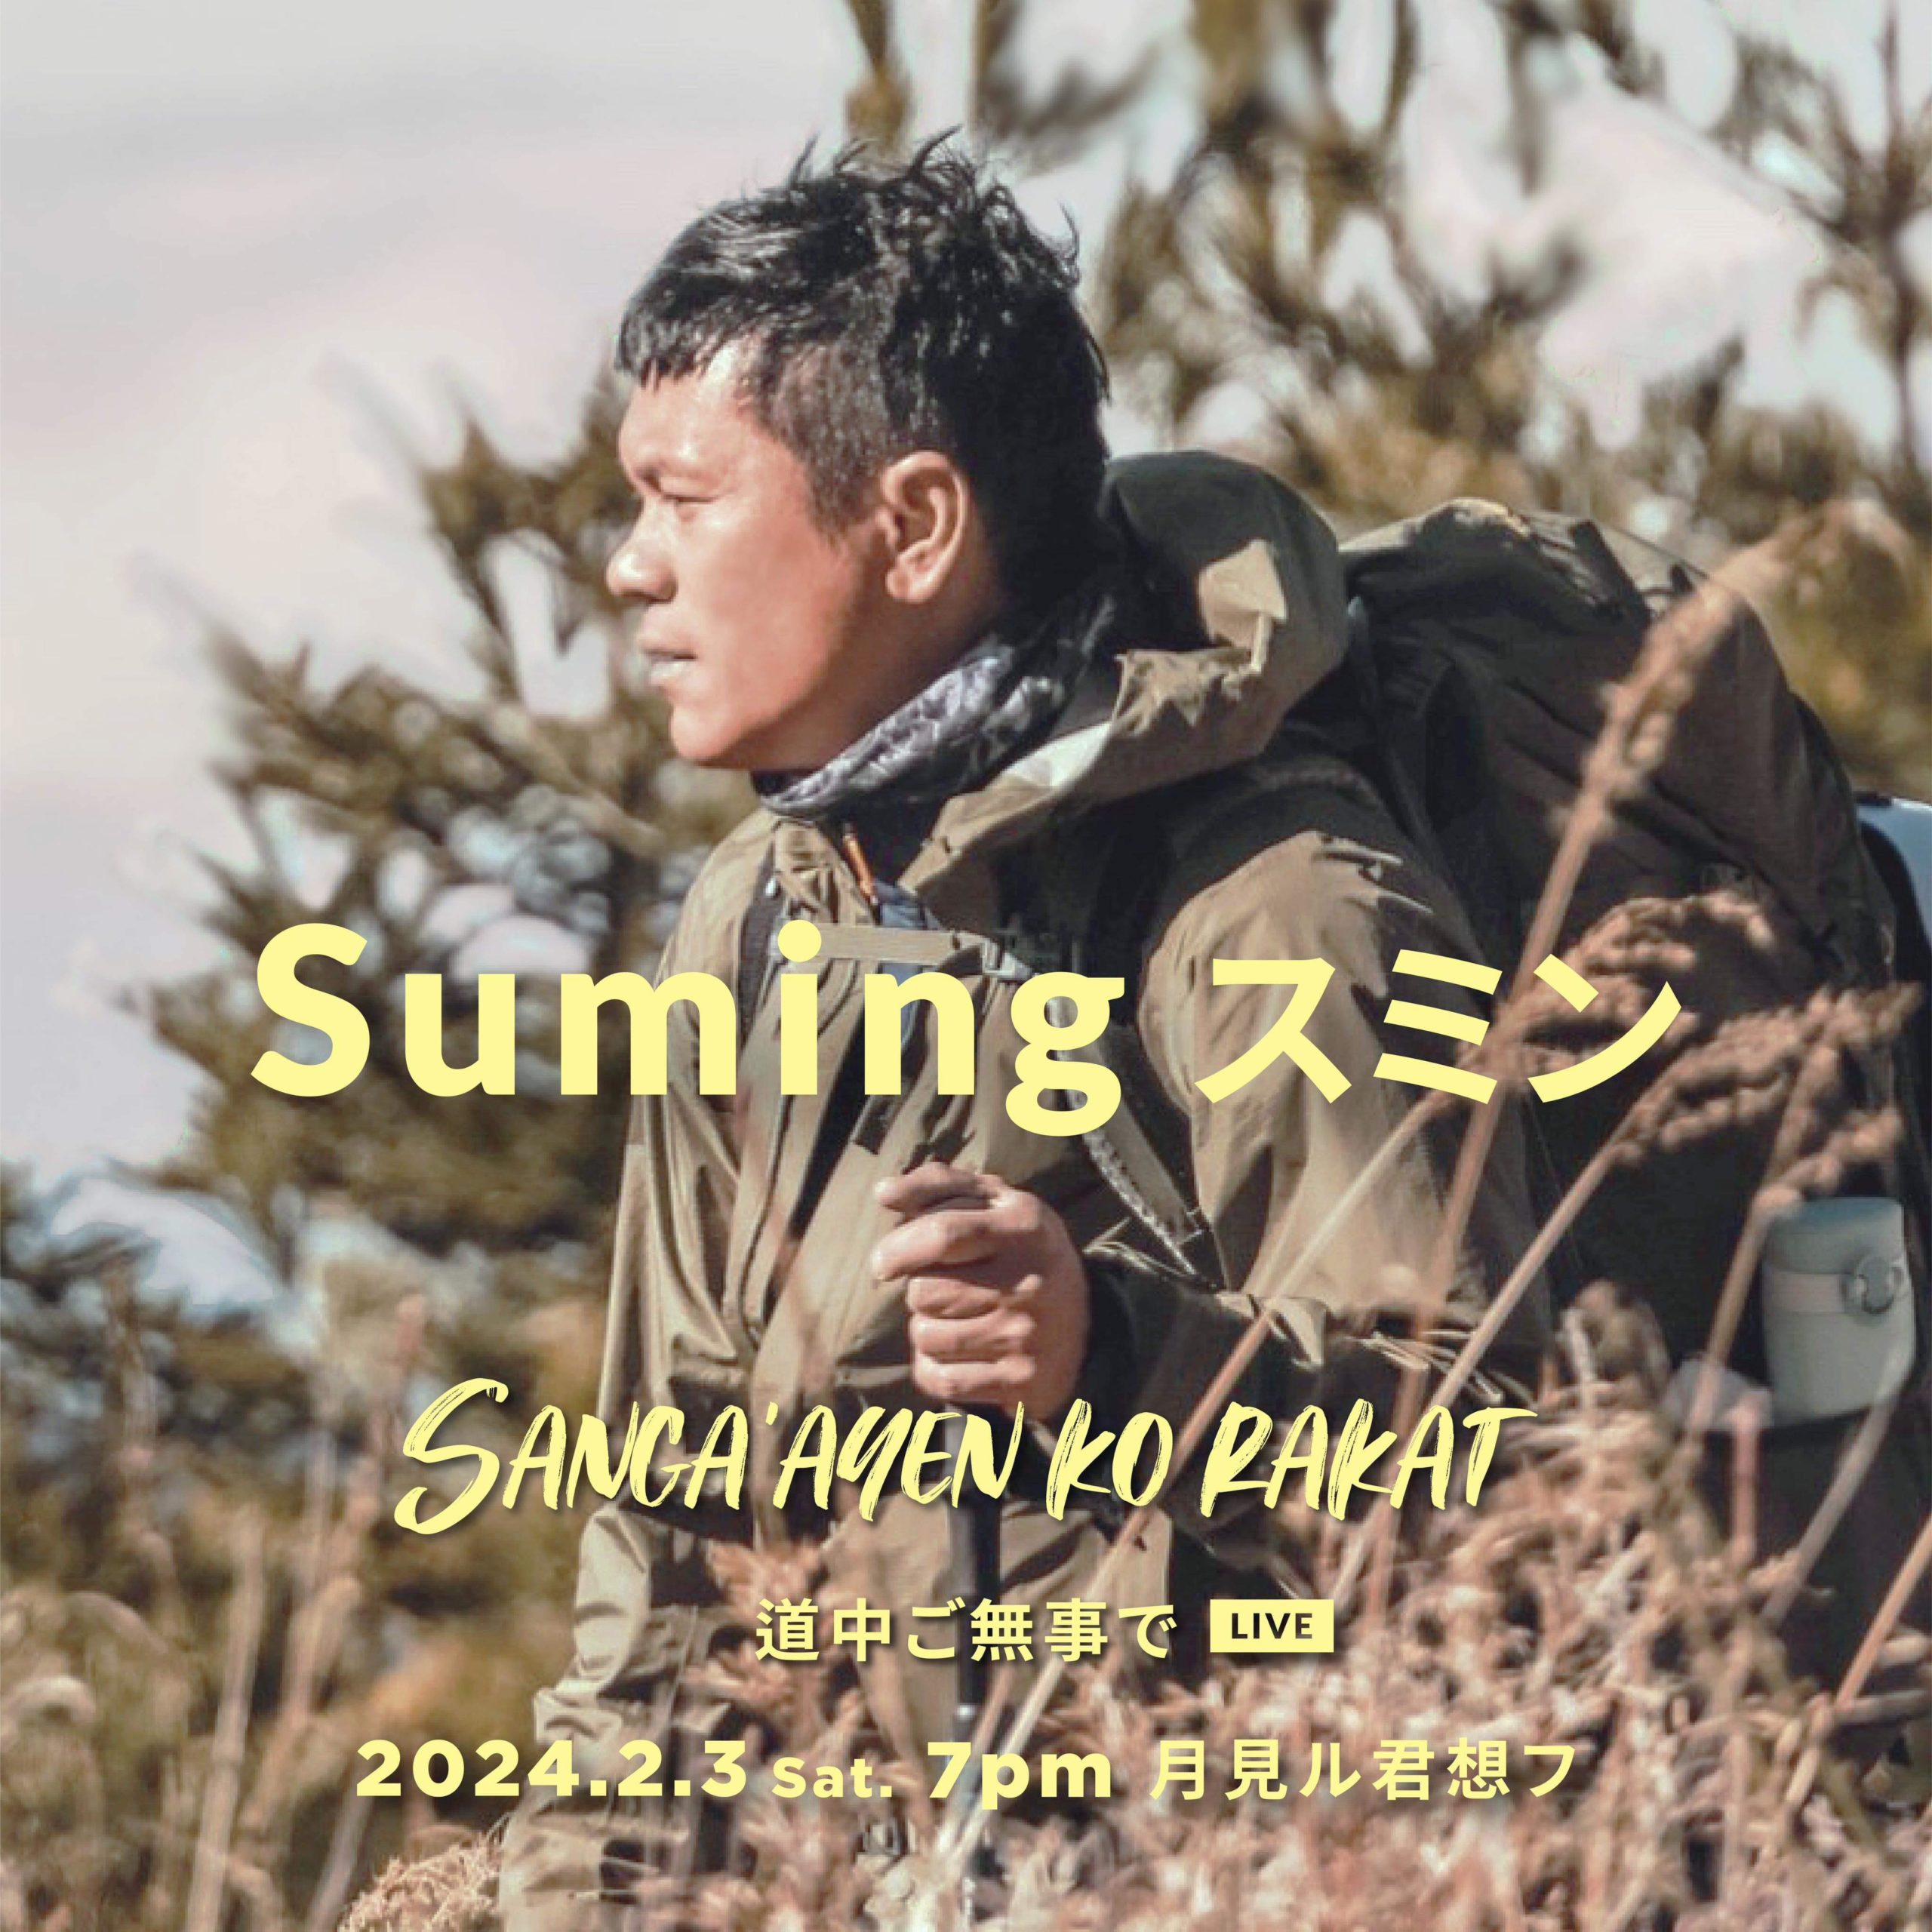 Suming（スミン）が日本で4年ぶりの単独ライブ！「Sanga’ayen ko rakat 道中でご無事で」